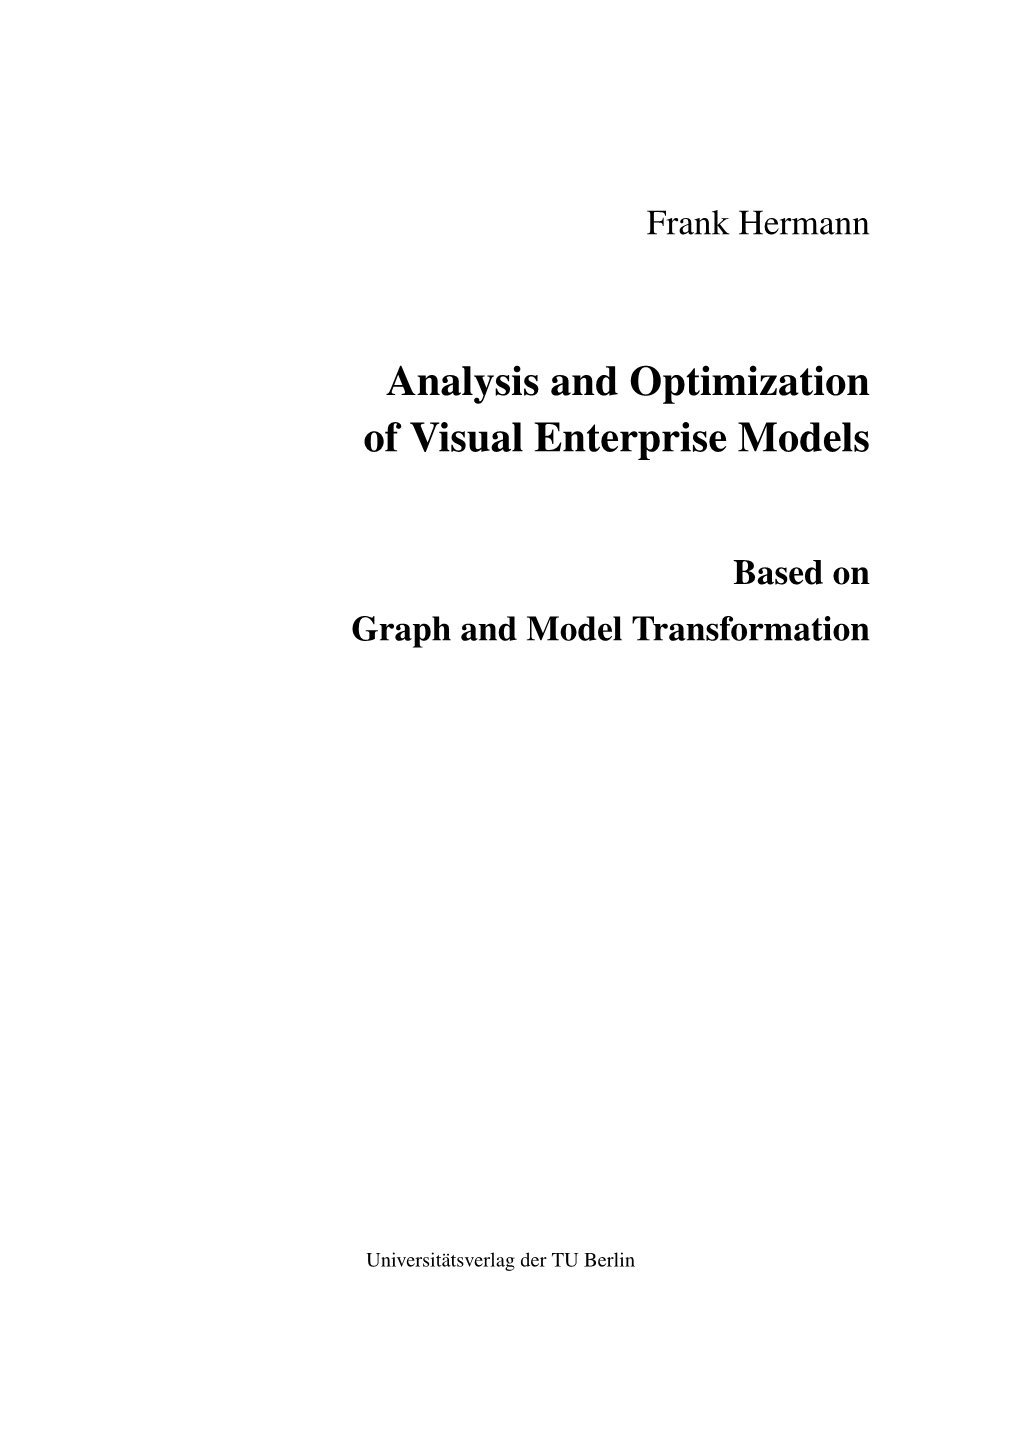 Analysis and Optimization of Visual Enterprise Models